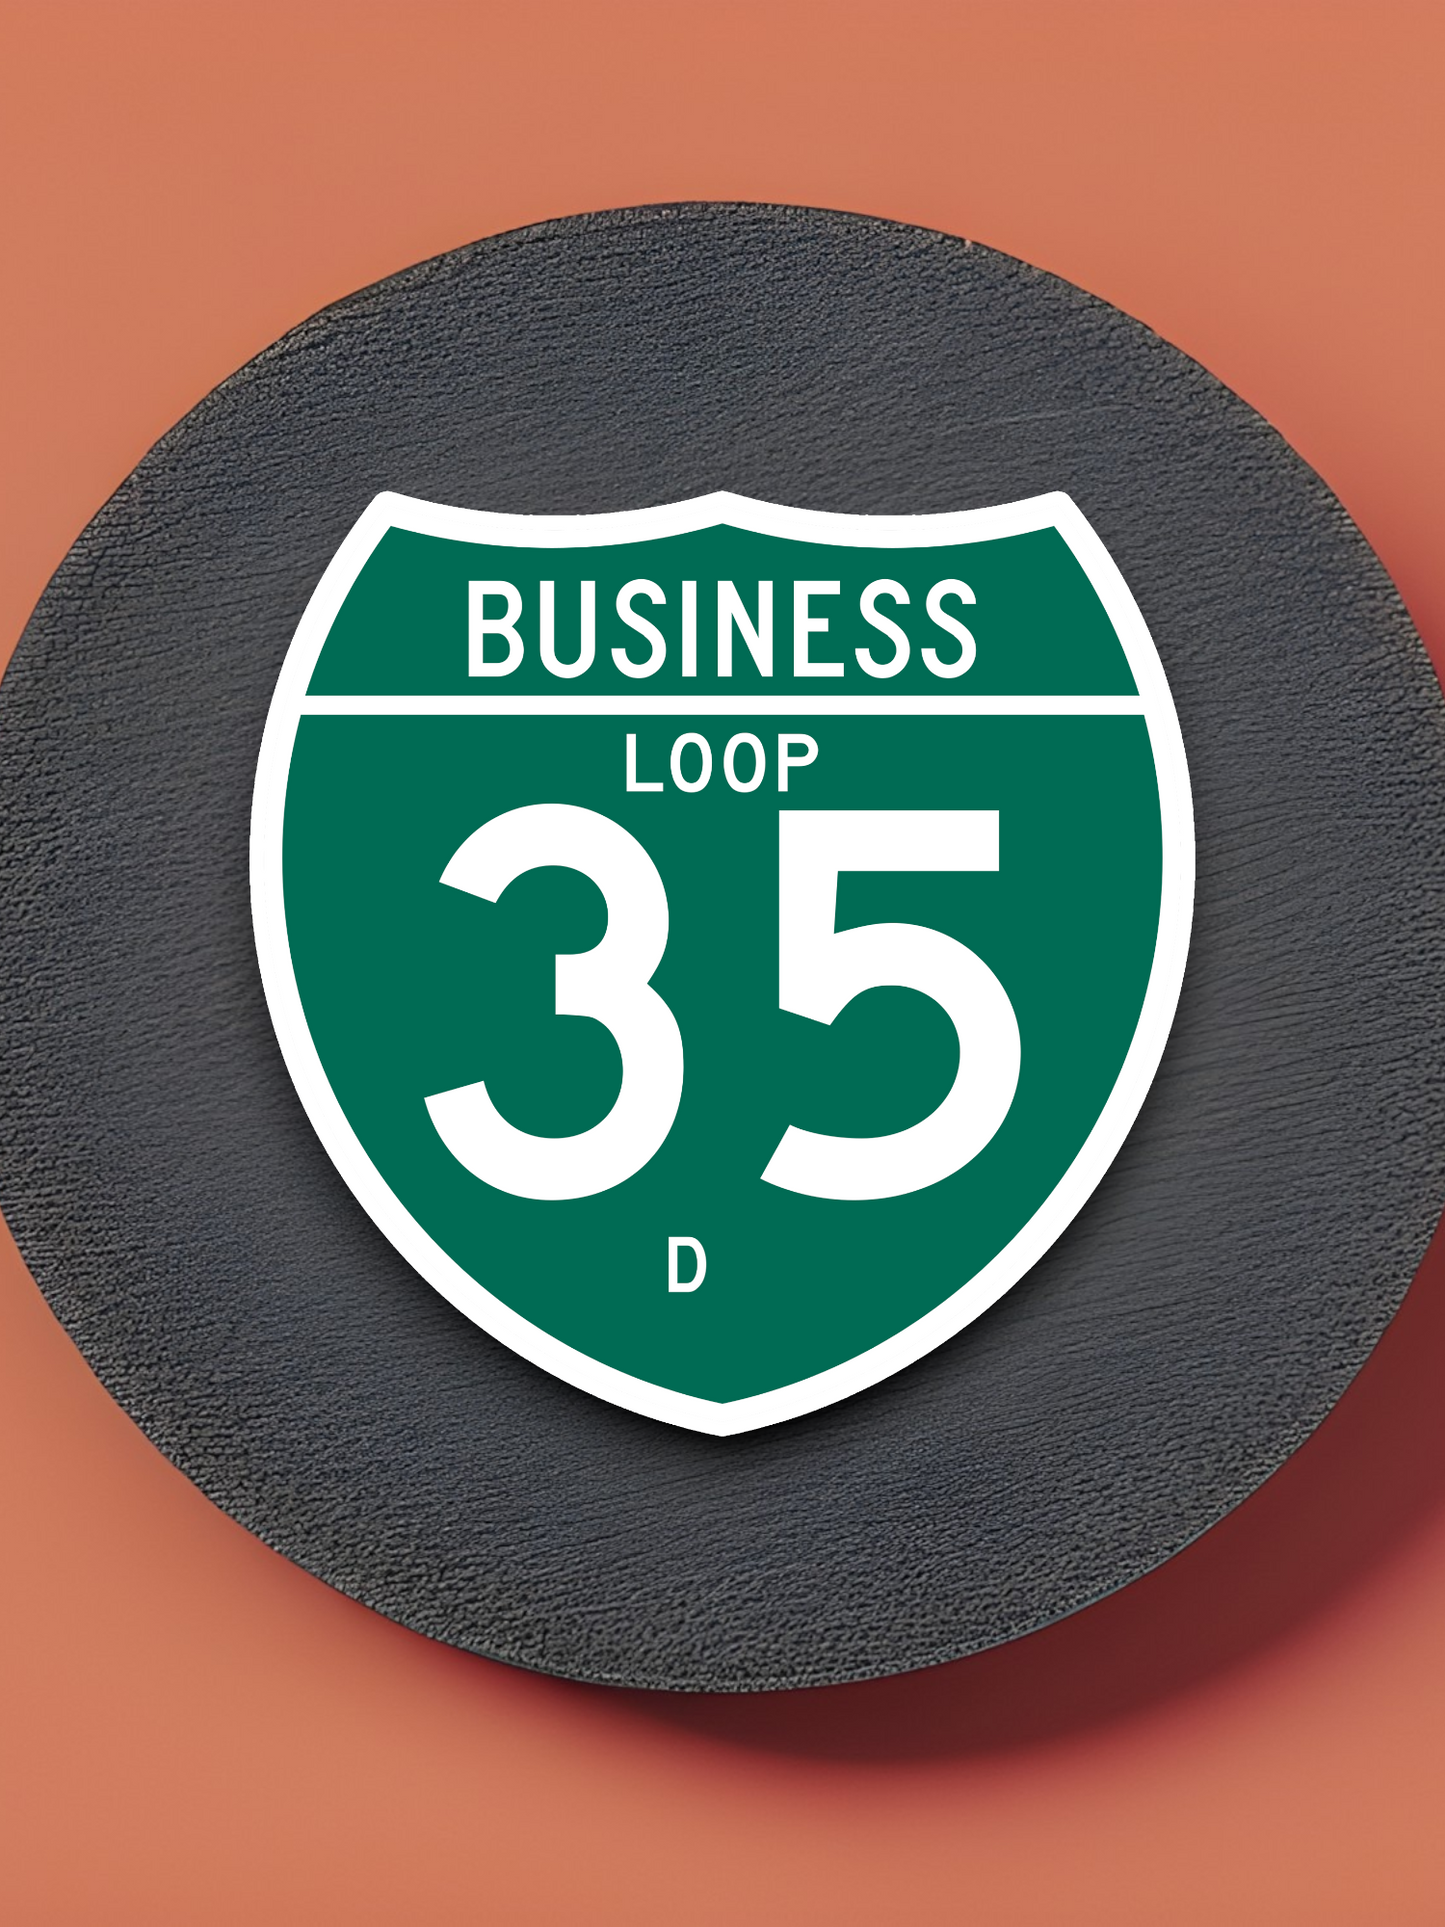 Business Spur Interstate 35-D Texas Road Sign Sticker